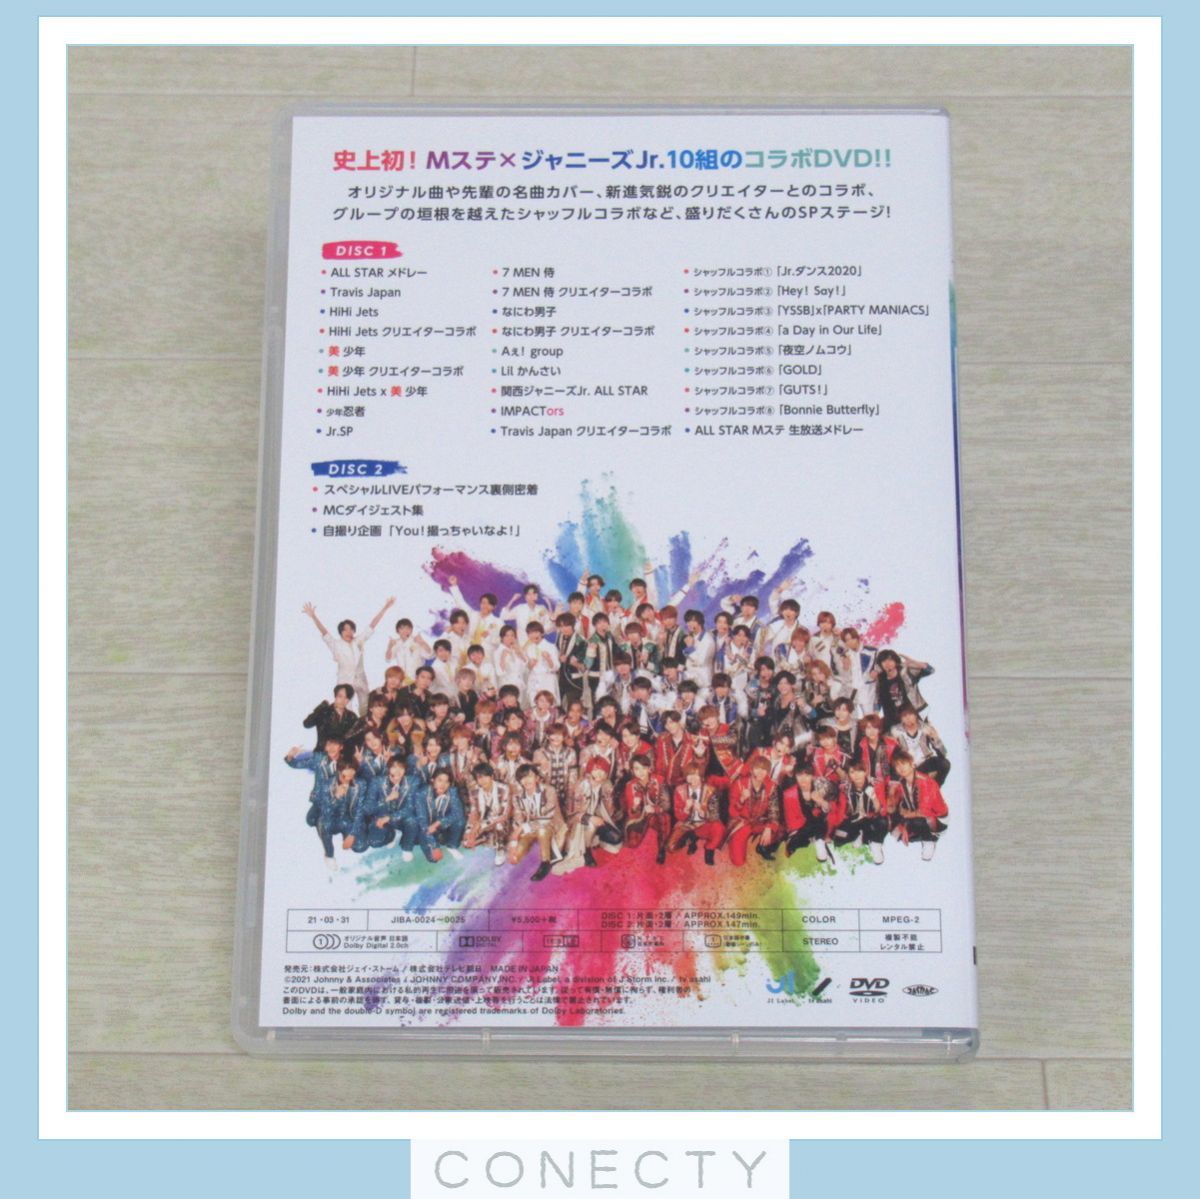 DVD MUSIC STATION × ジャニーズJr. SPECIAL LIVE 2DVD Travis Japan/HiHi Jets/美 少年/なにわ男子/Aぇ!group【I4【SP_画像5